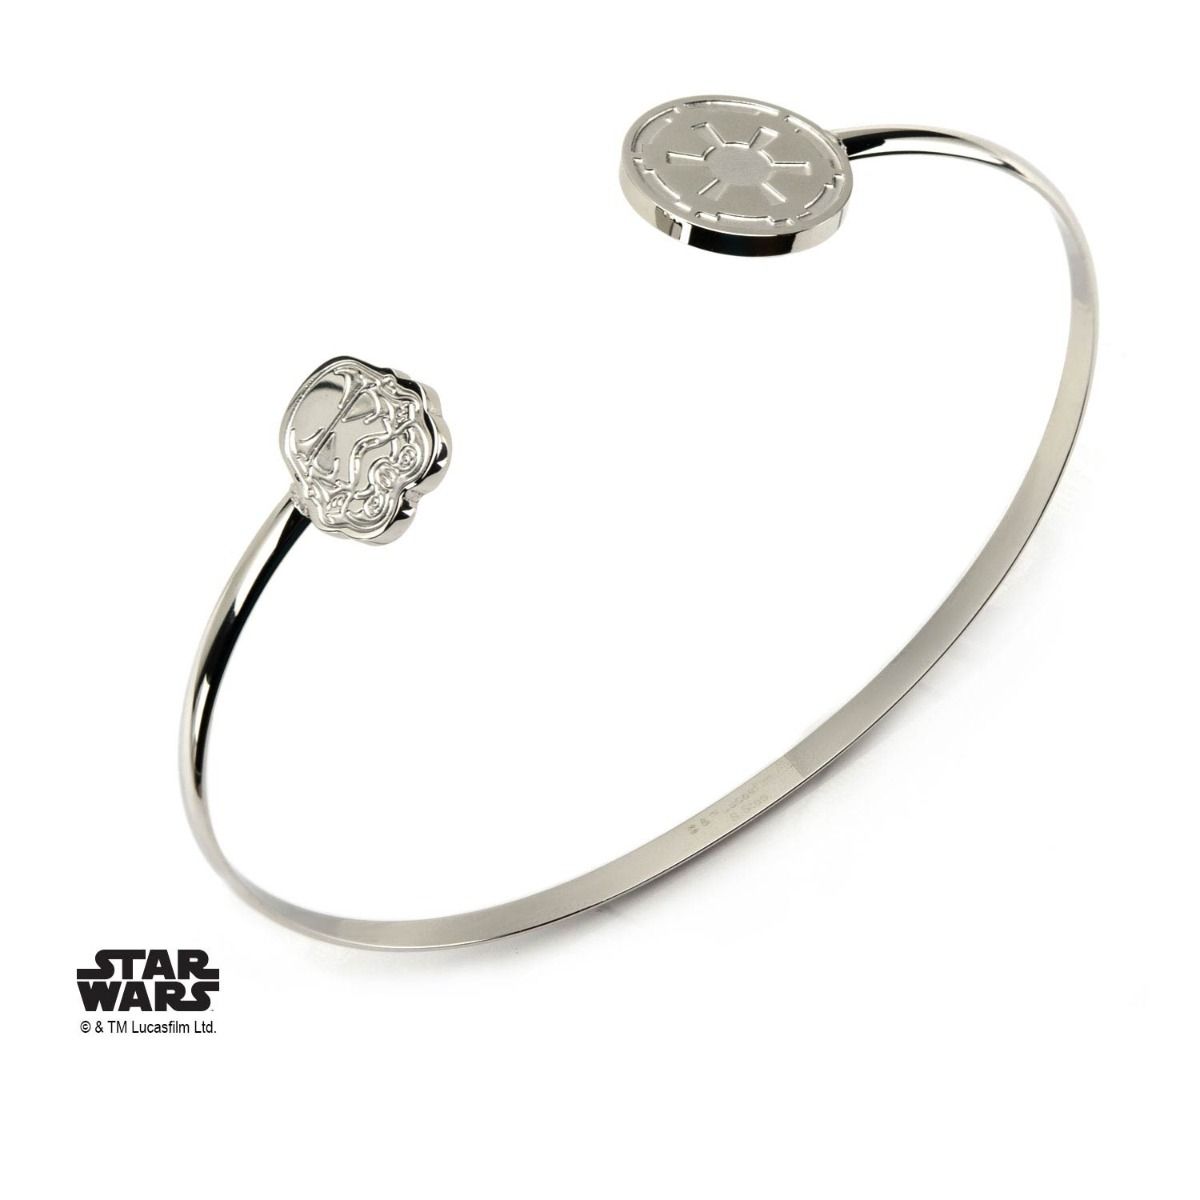 STAR WARS Star Wars Stormtrooper Cuff Bangle Bracelet A -Rebel Bod-RebelBod